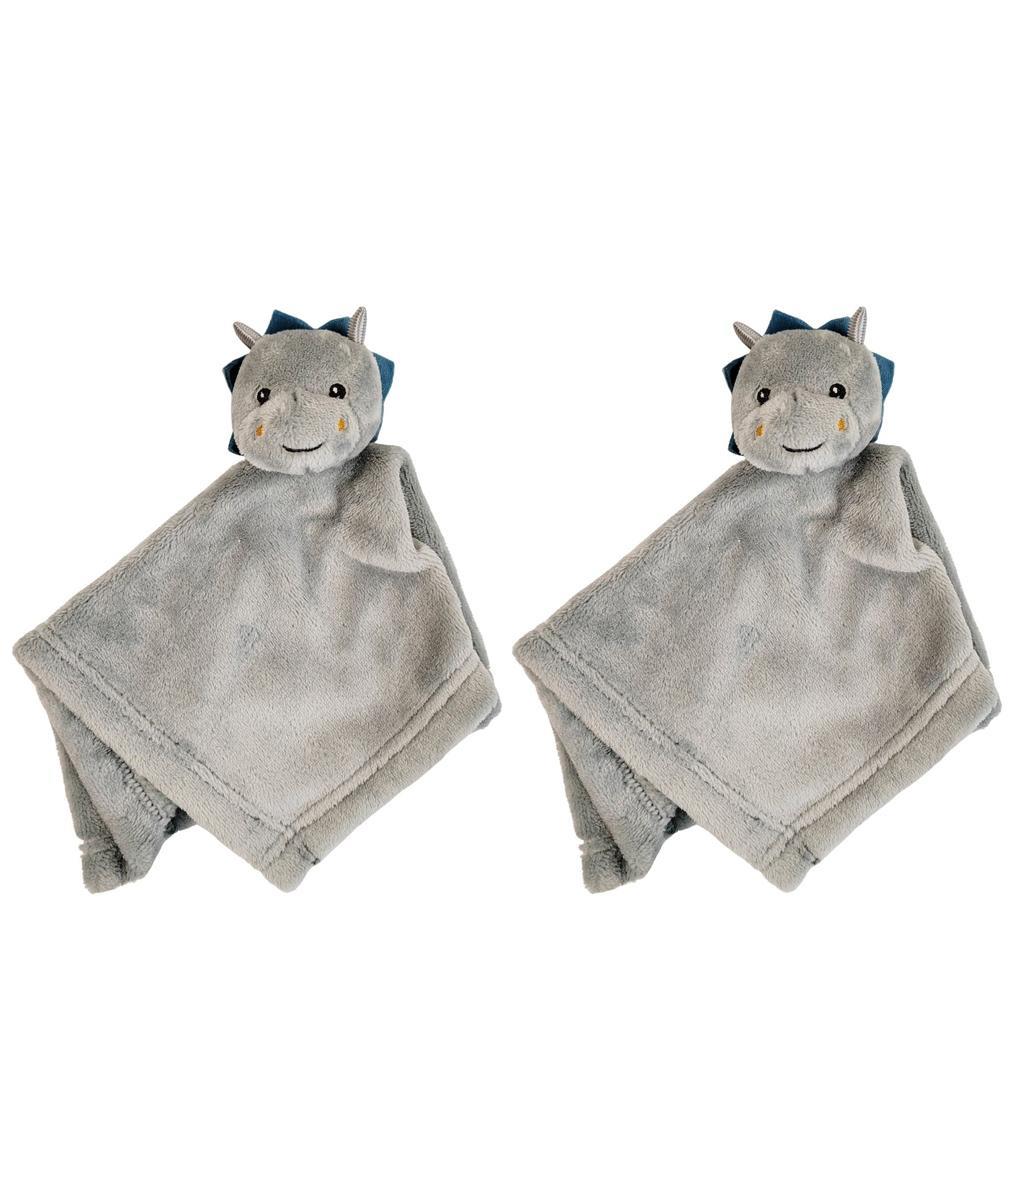 2x Urban Dinosaur 31cm Comforter Baby Cuddle Blanket w/Animal Plush Toy Teal